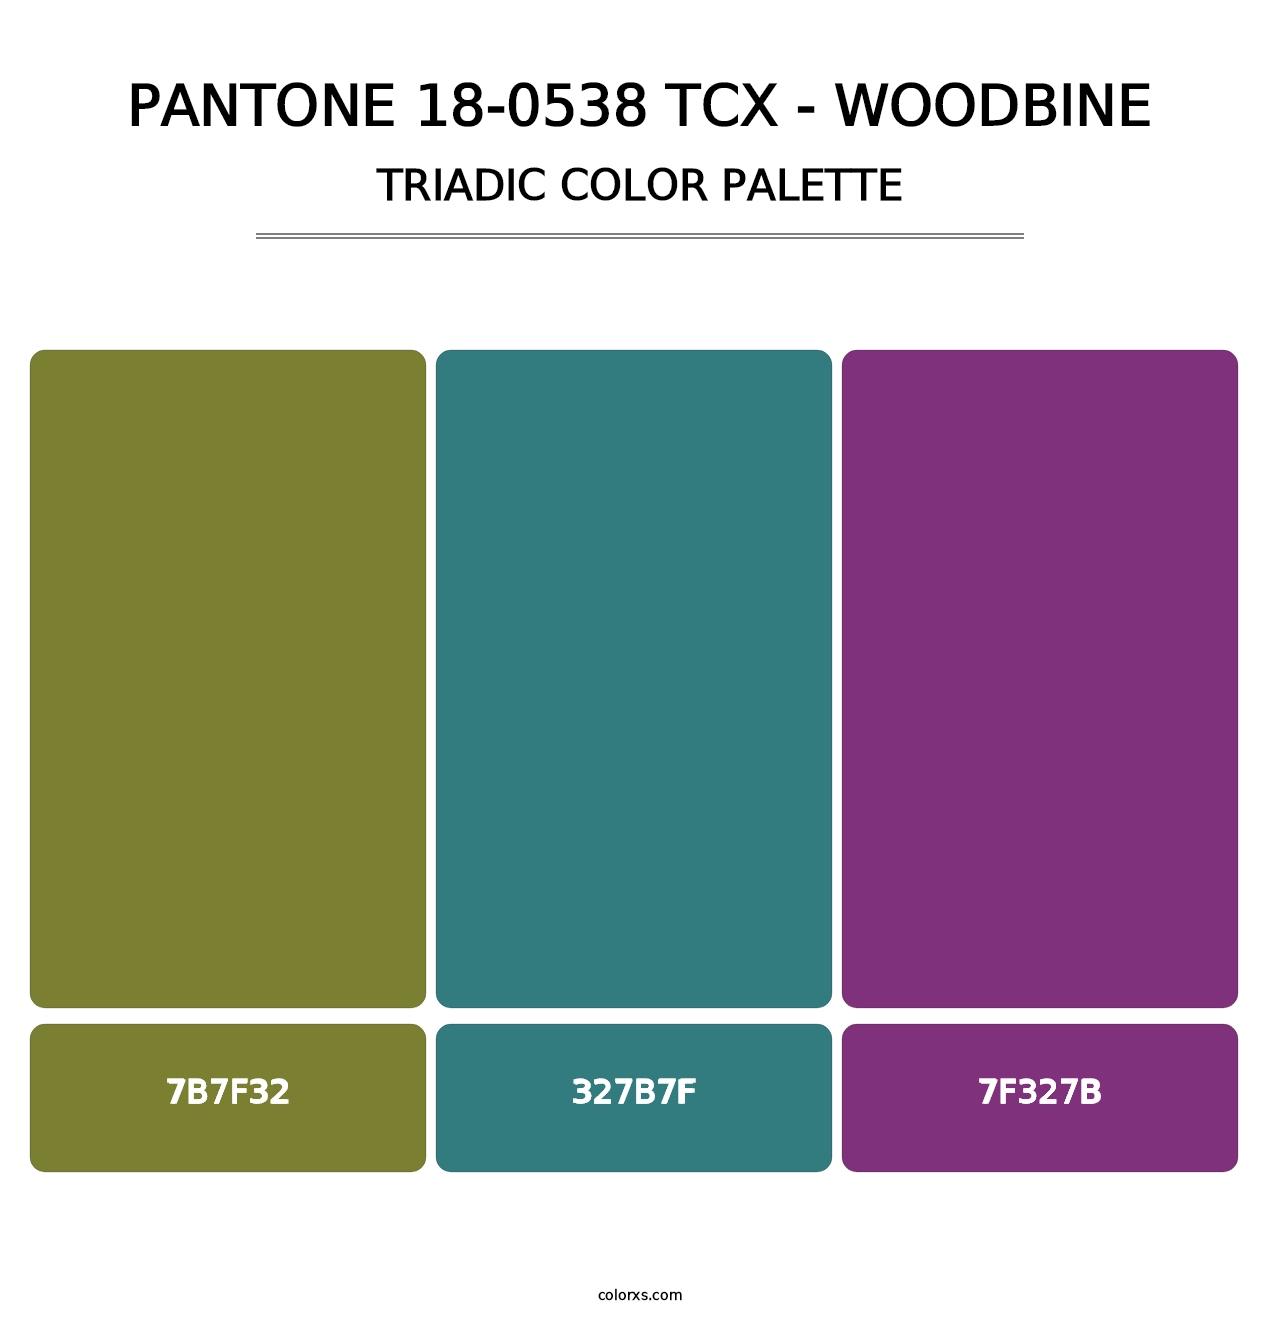 PANTONE 18-0538 TCX - Woodbine - Triadic Color Palette